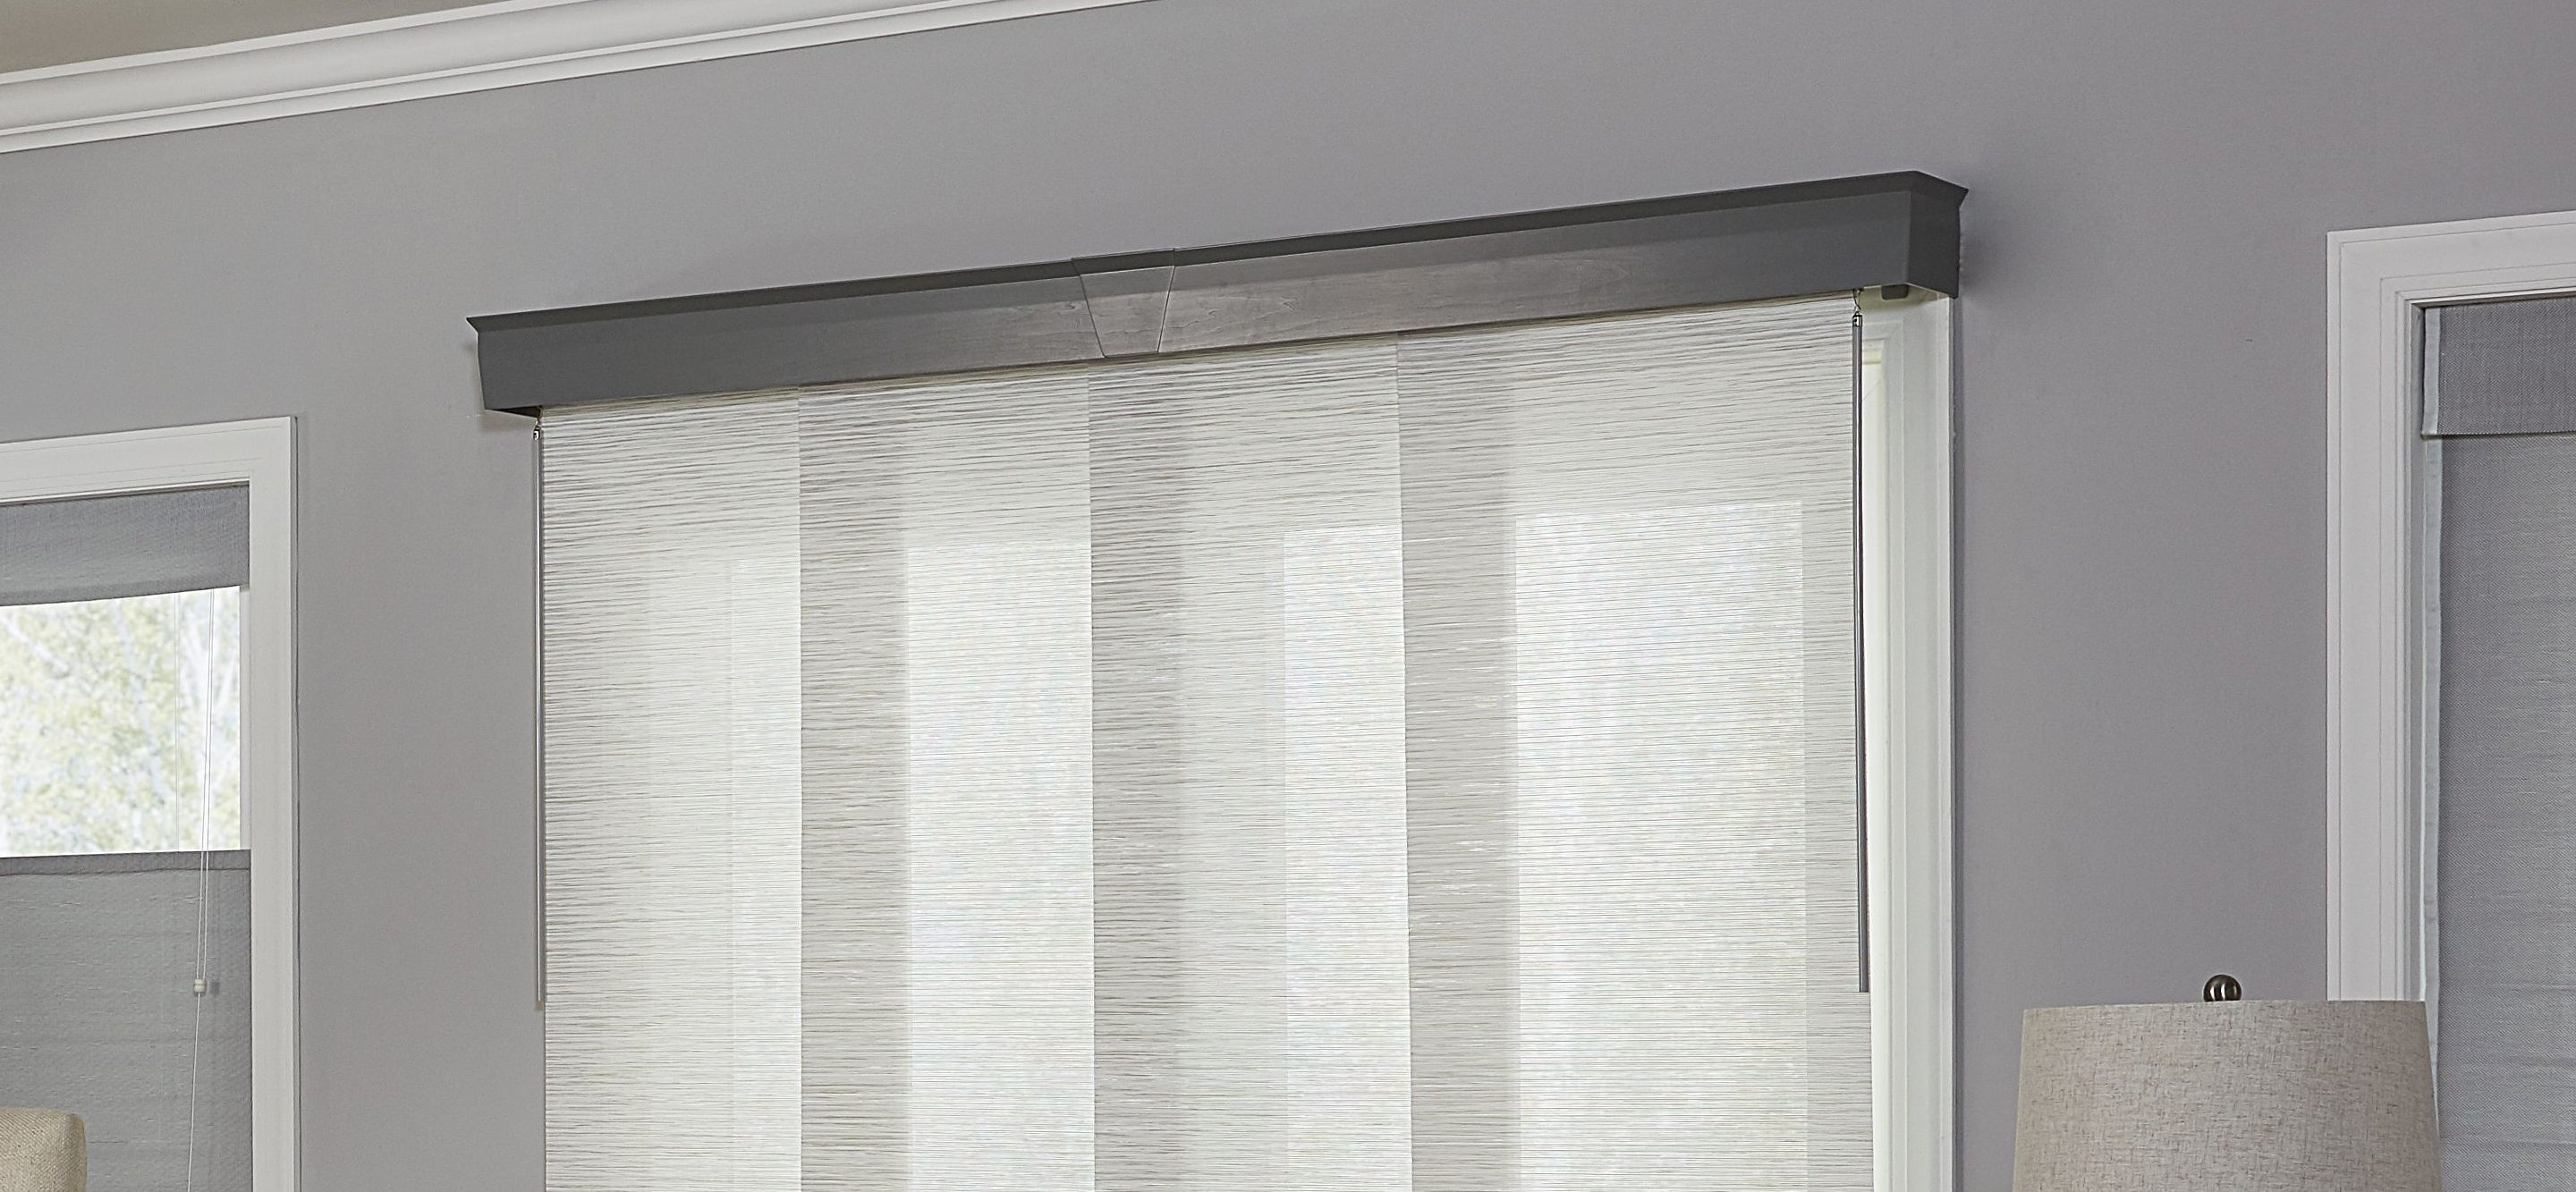 The Best Vertical Blinds Alternatives For Sliding Glass Doors intended for sizing 2880 X 1333